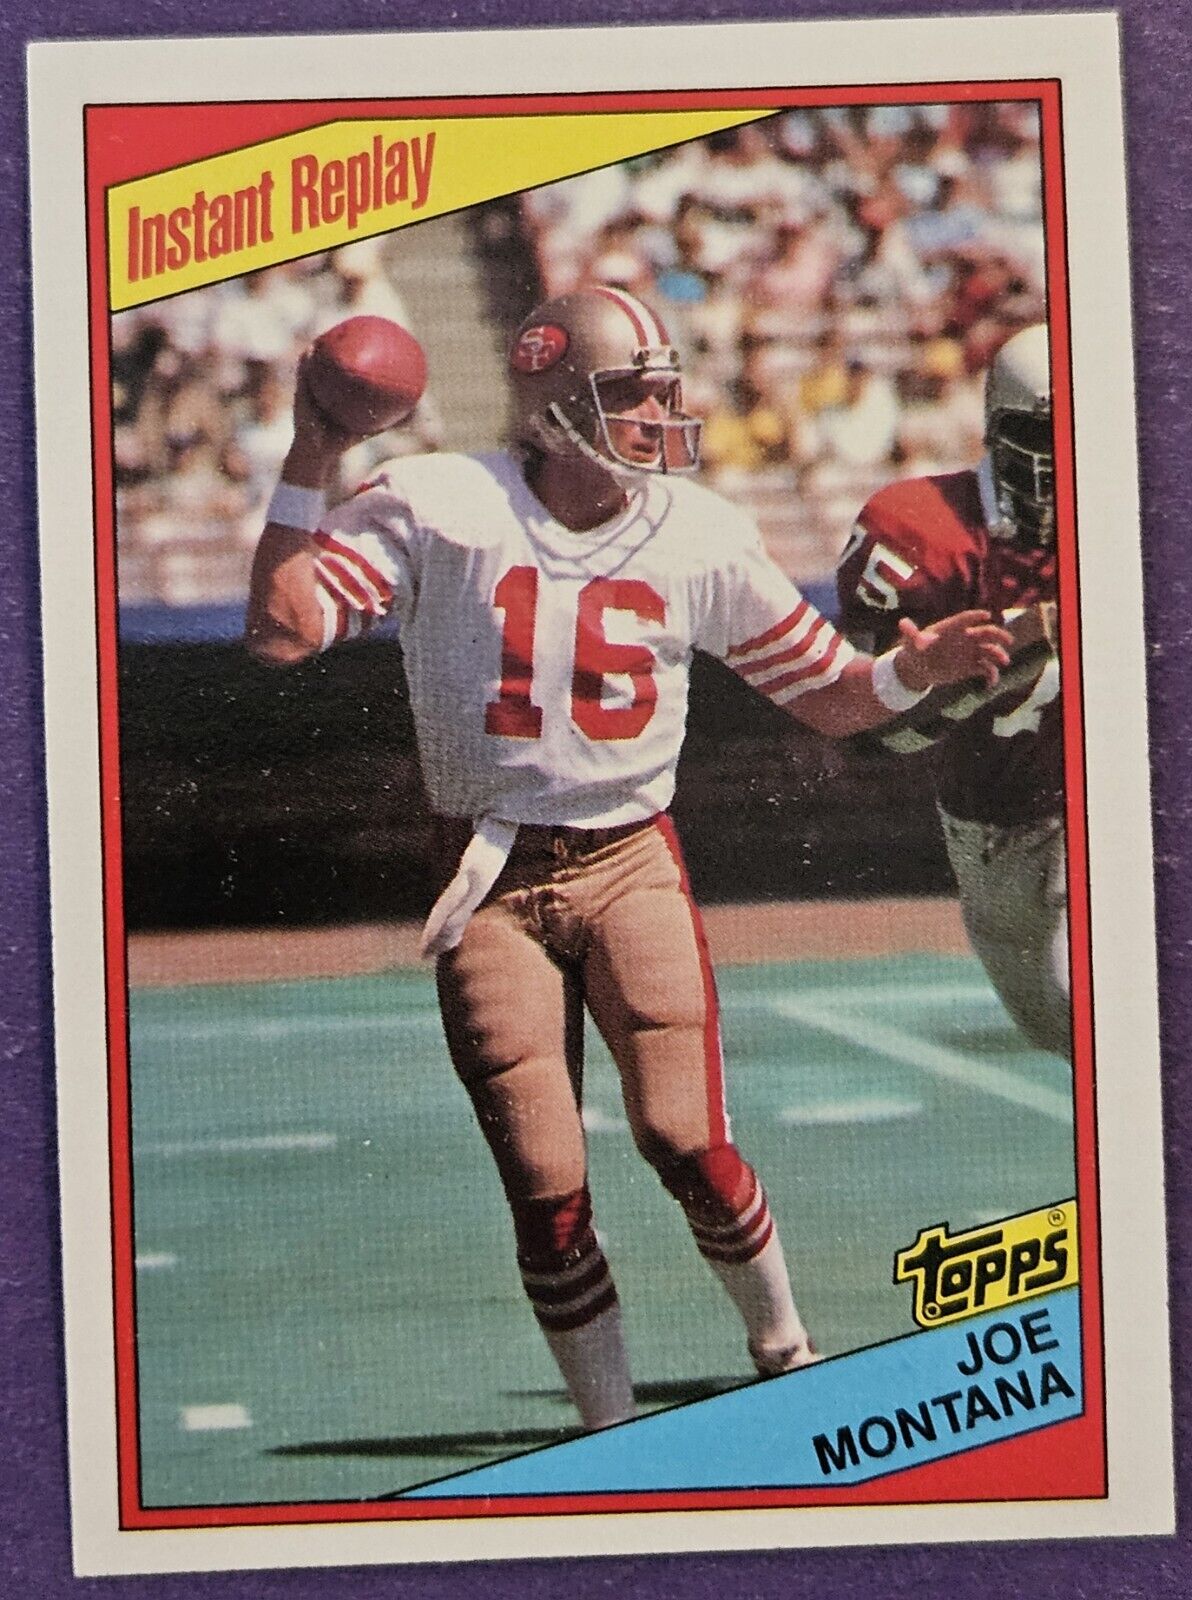 1984 Topps #359 Joe Montana Instant Replay Football card San Francisco 49ers HOF